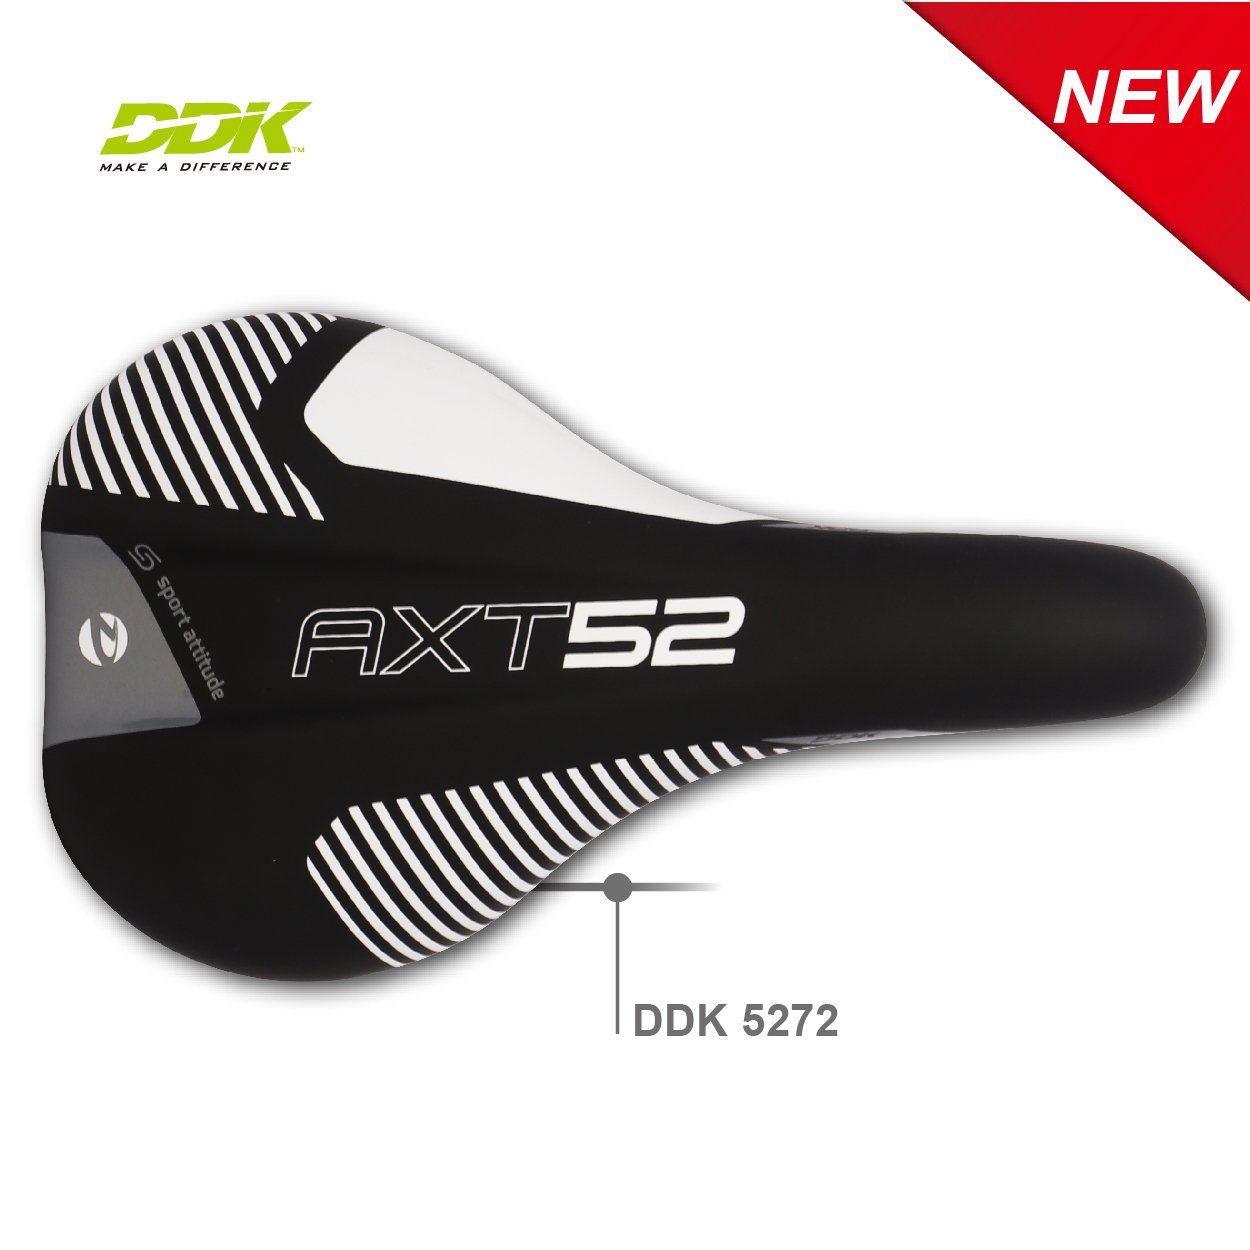 DDK-5272 AXT52